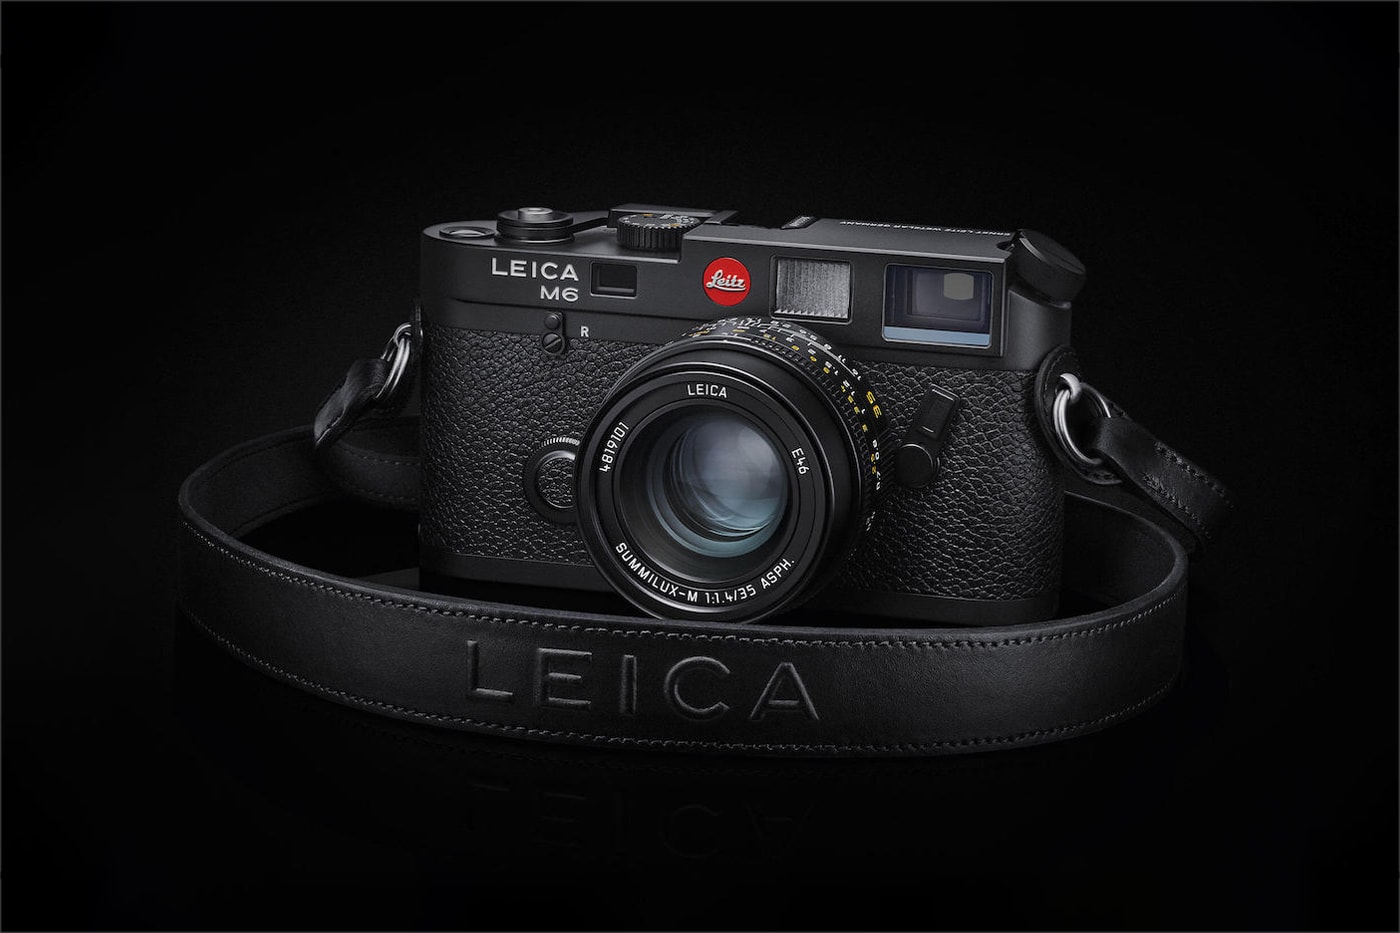 Leica Revives M6 35MM Film Rangefinder